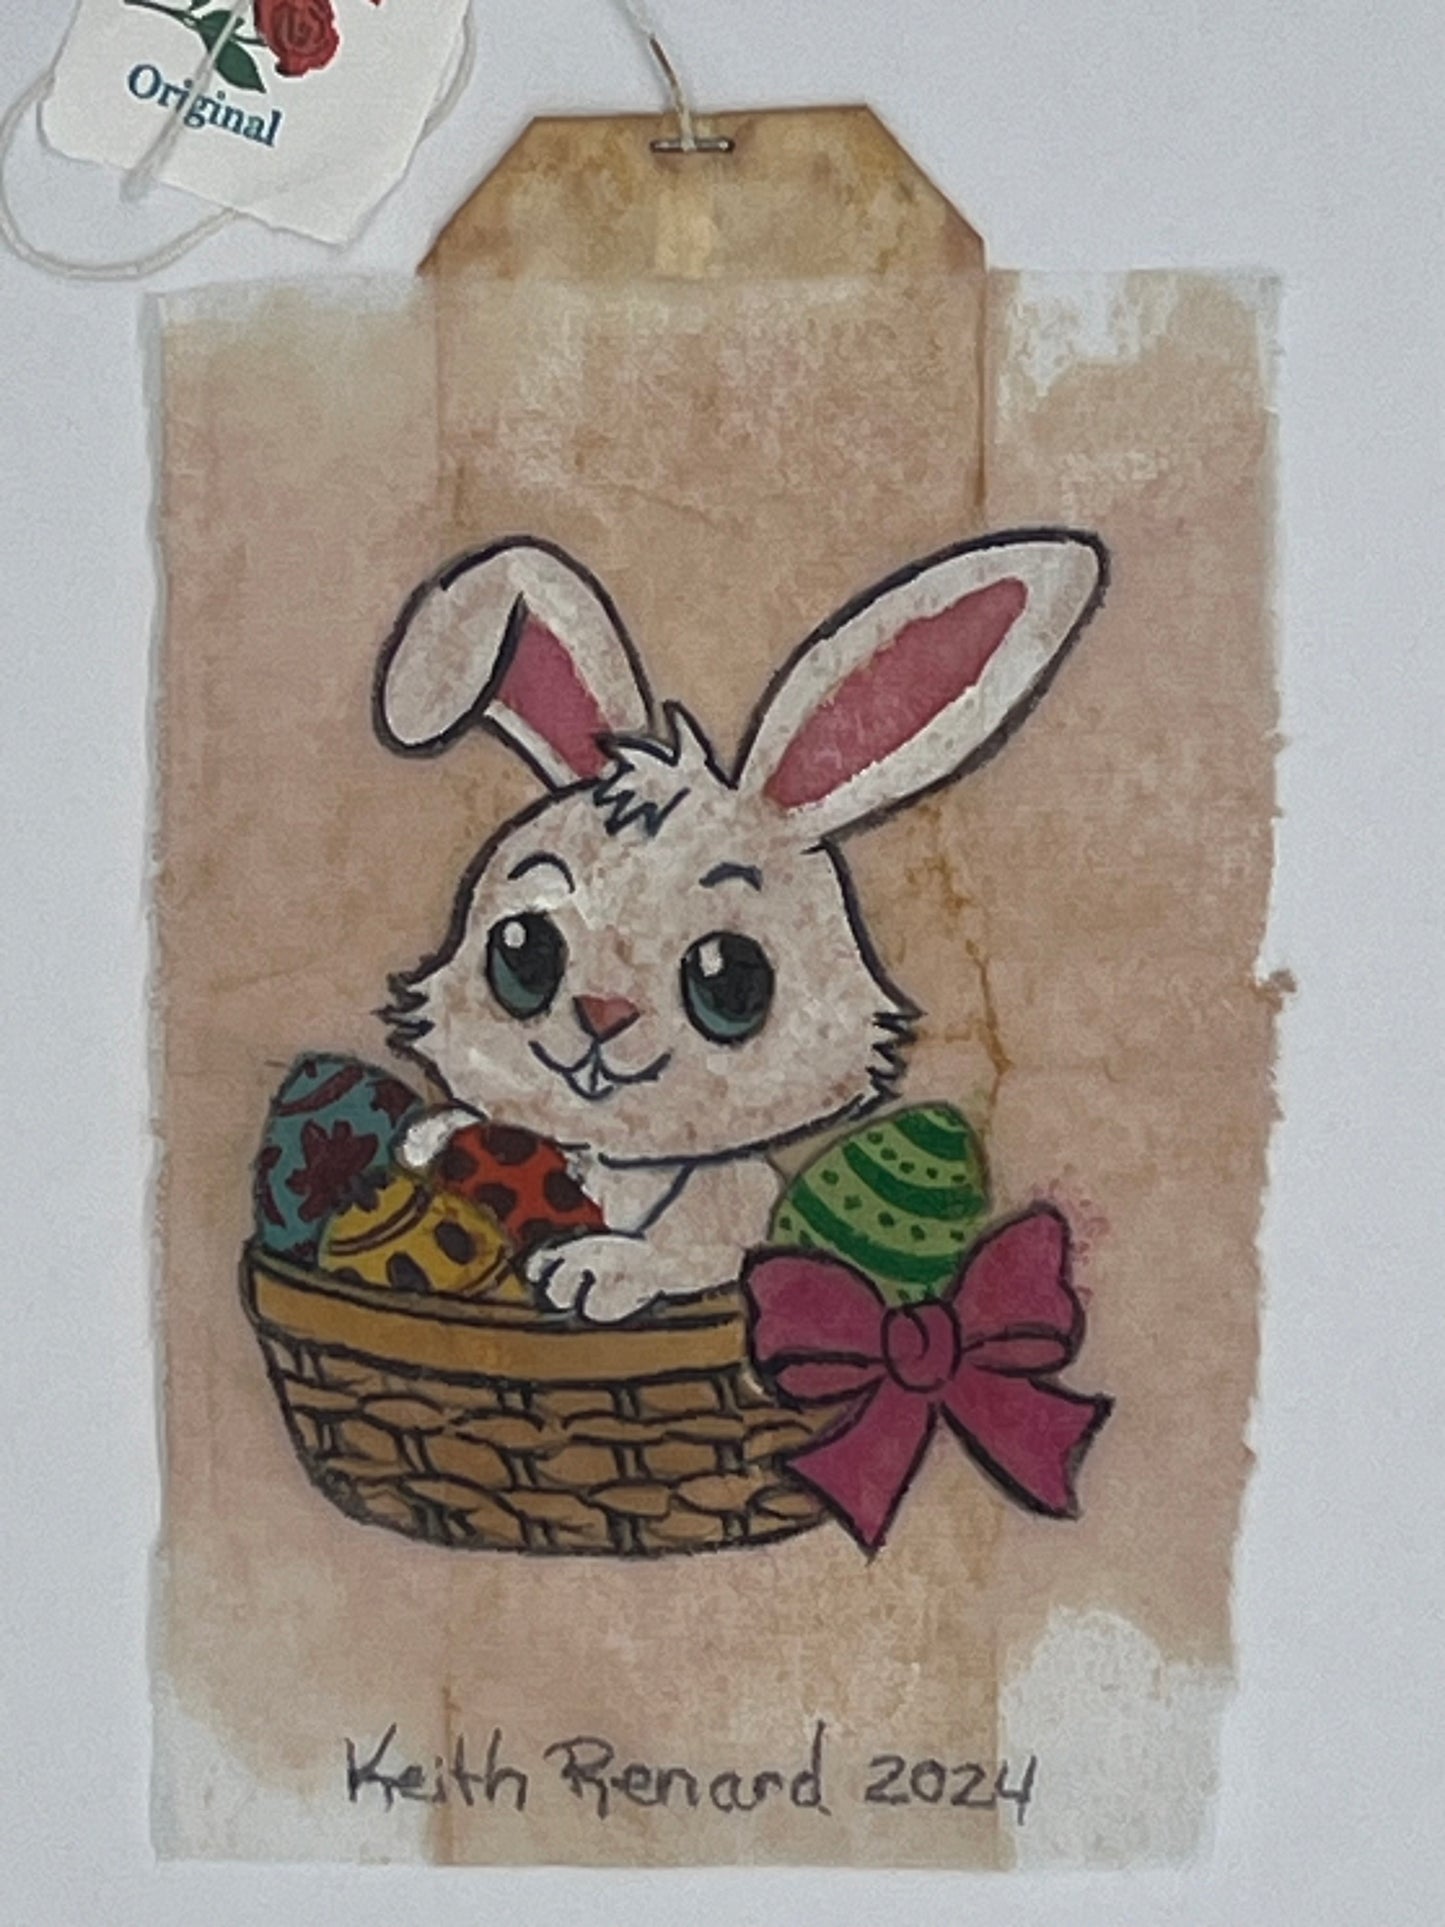 Easter bunny in basket